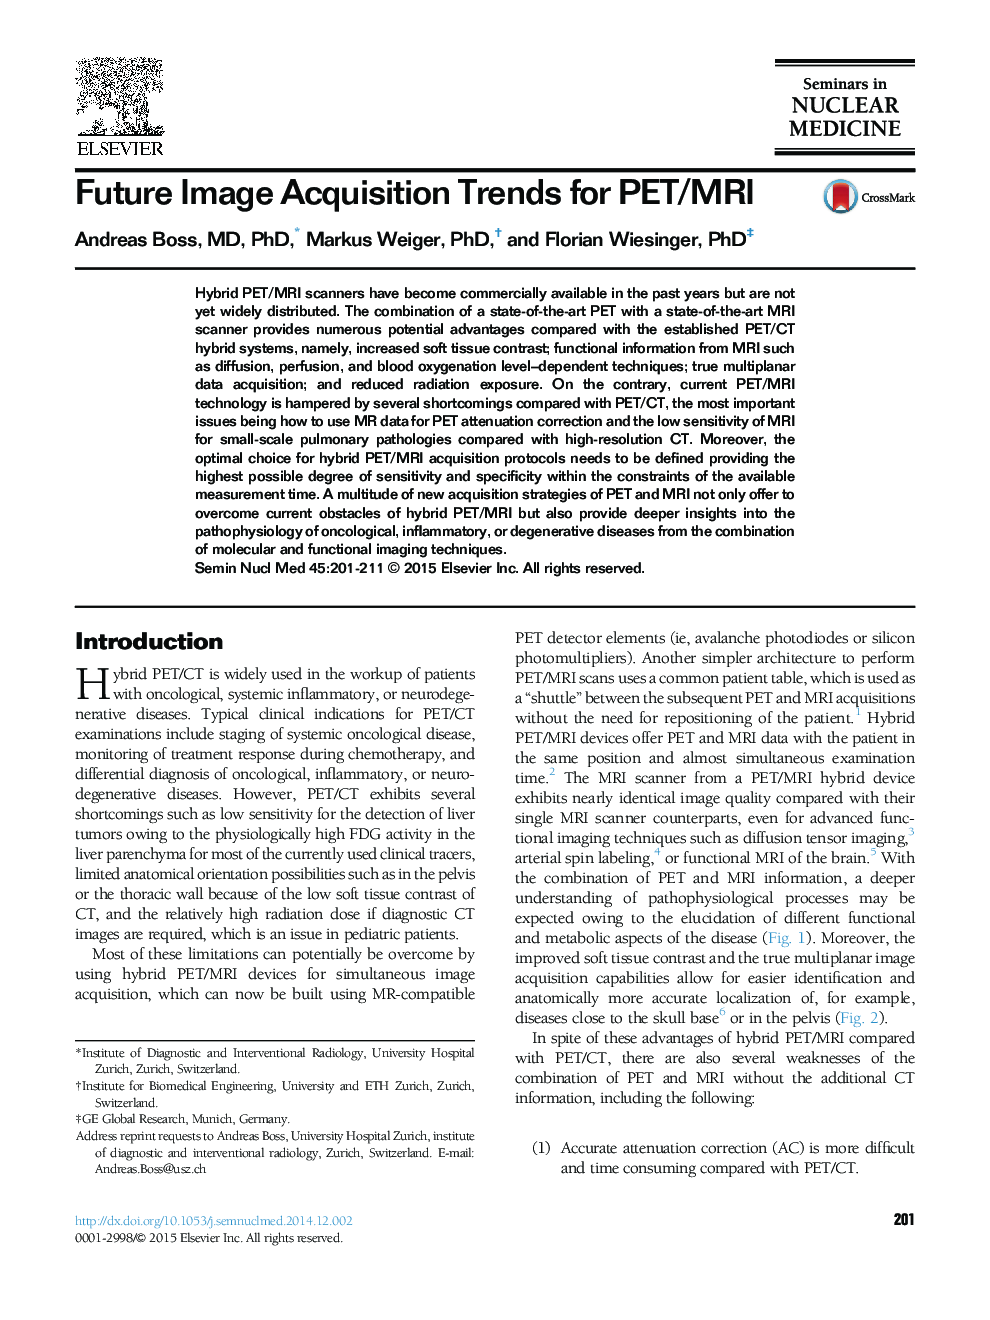 Future Image Acquisition Trends for PET/MRI